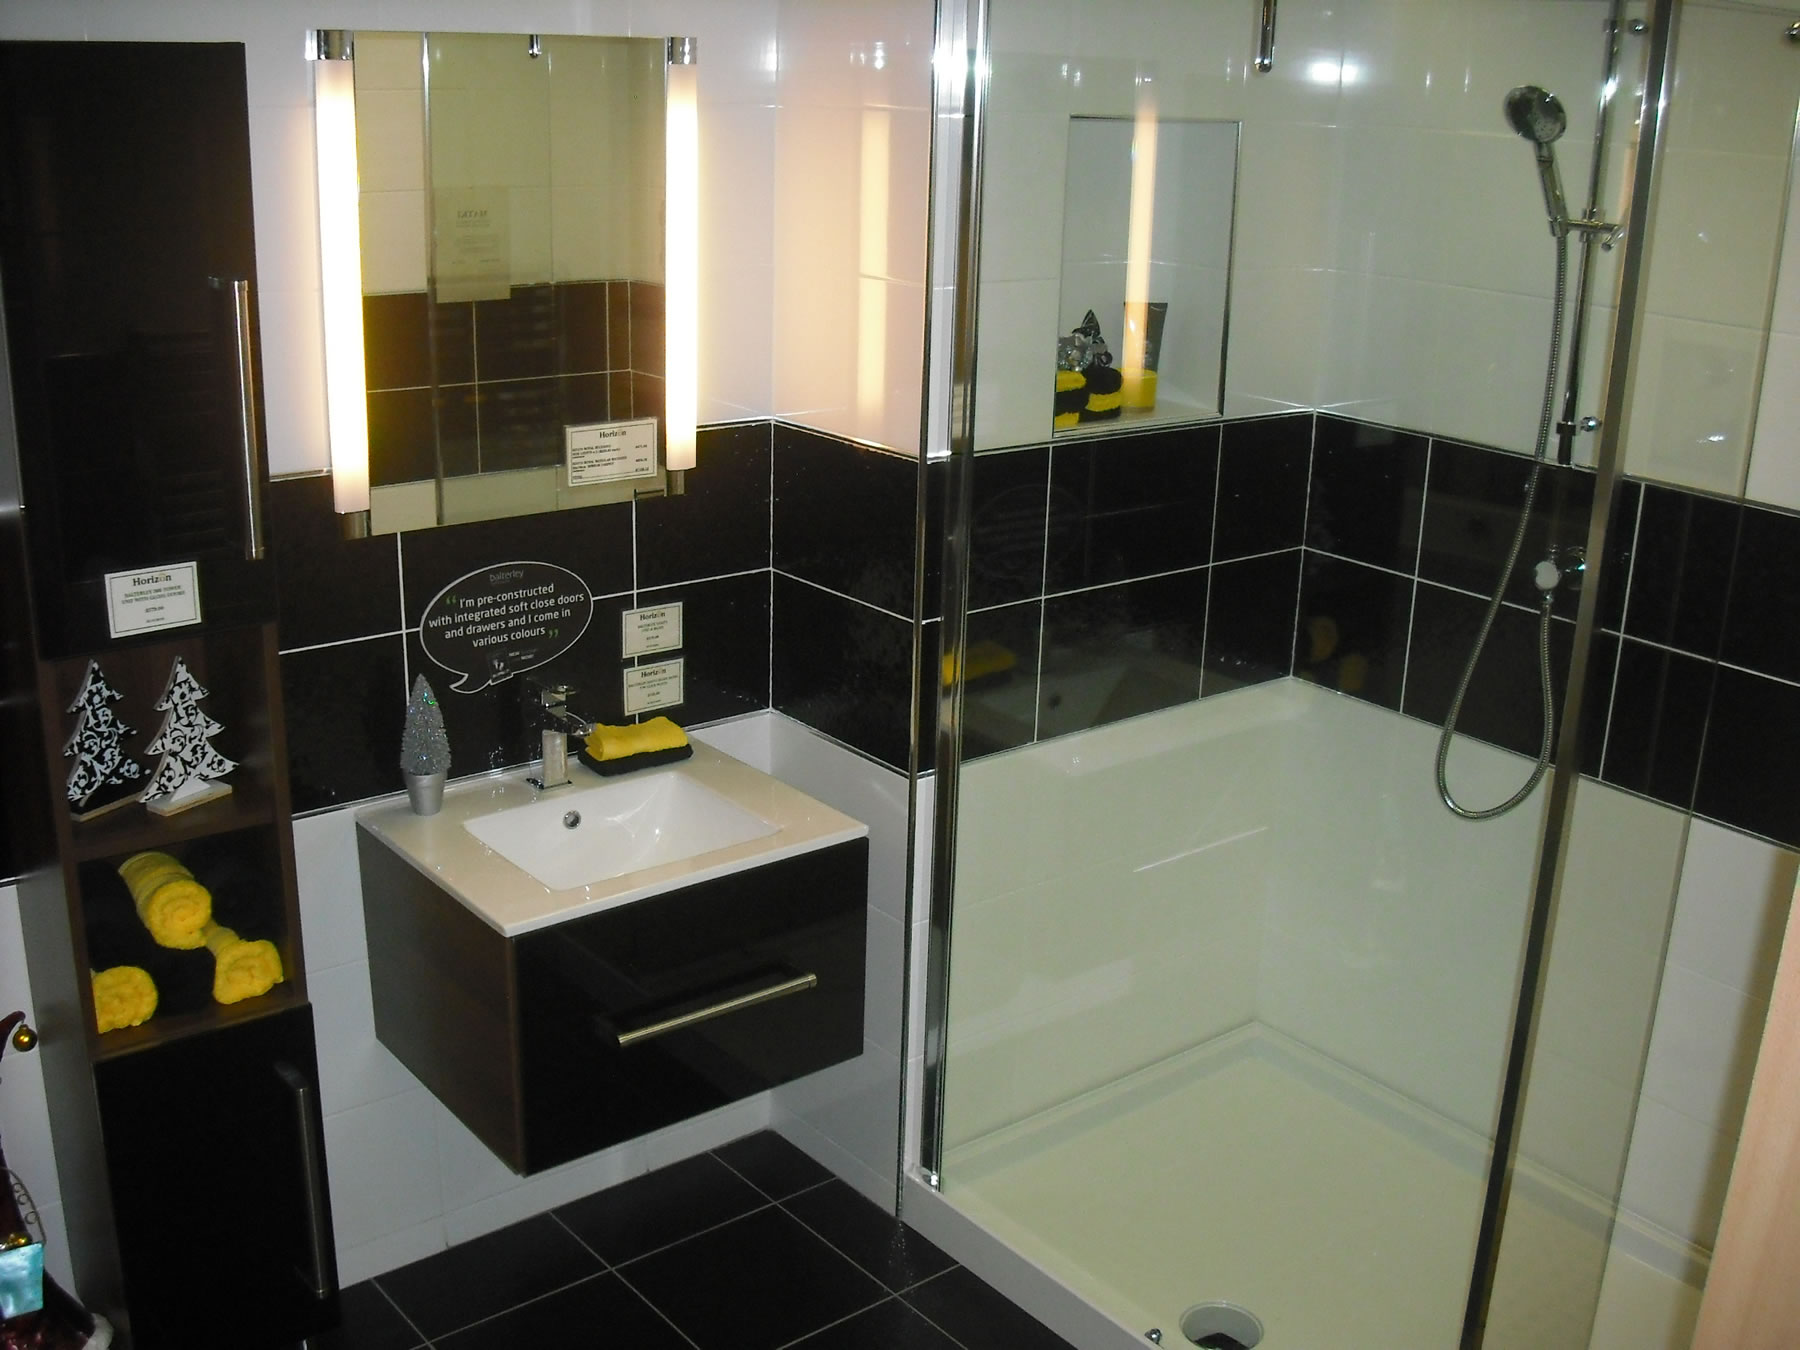 DIY-designs-black-and-white-bathroom-tile-design-ideas-images-ideas